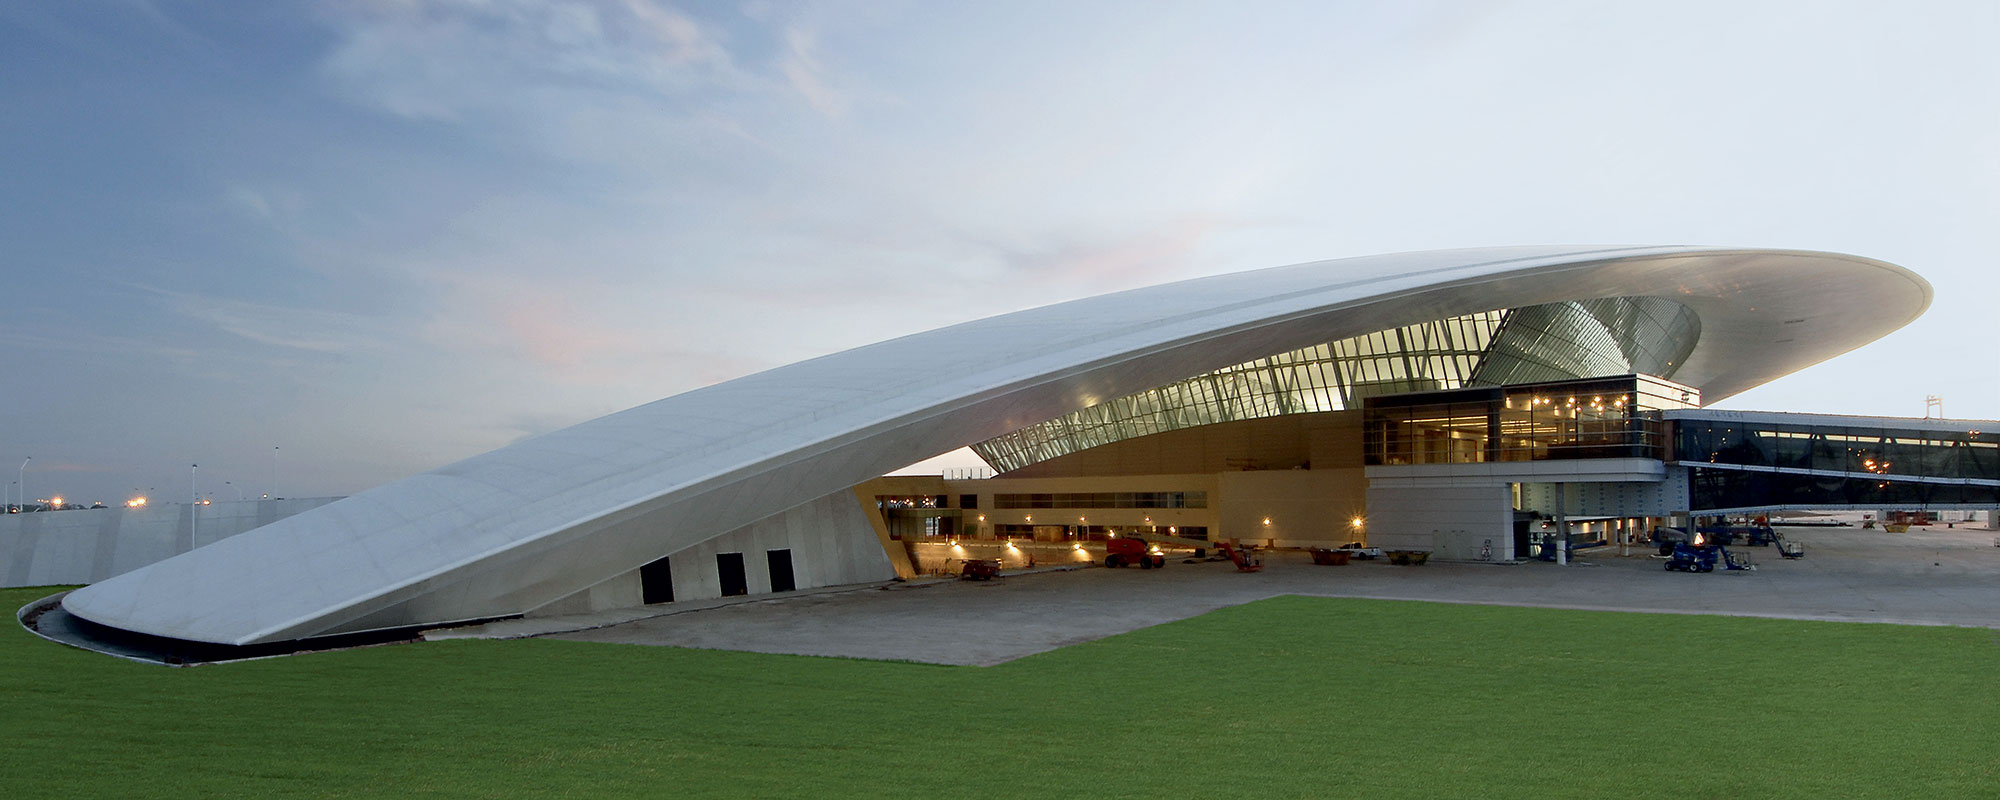 Rafael Viñoly Architects | Aeropuerto Internacional de Carrasco, Nueva  Terminal - Rafael Viñoly Architects